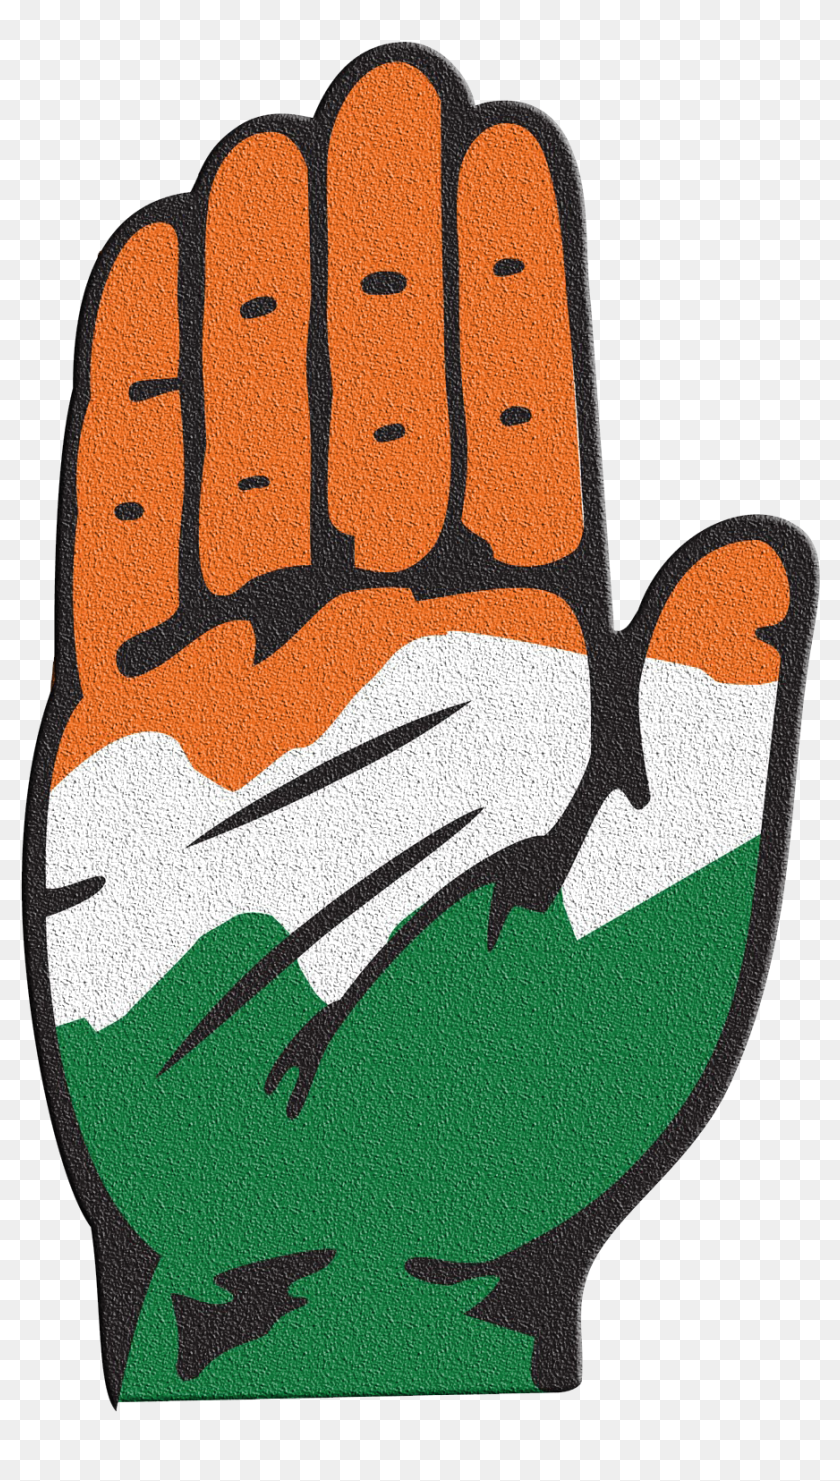 Congress Logo Png Transparent Image - Indian National Congress Logo, Png  Download - 992x1600(#6703305) - PngFind